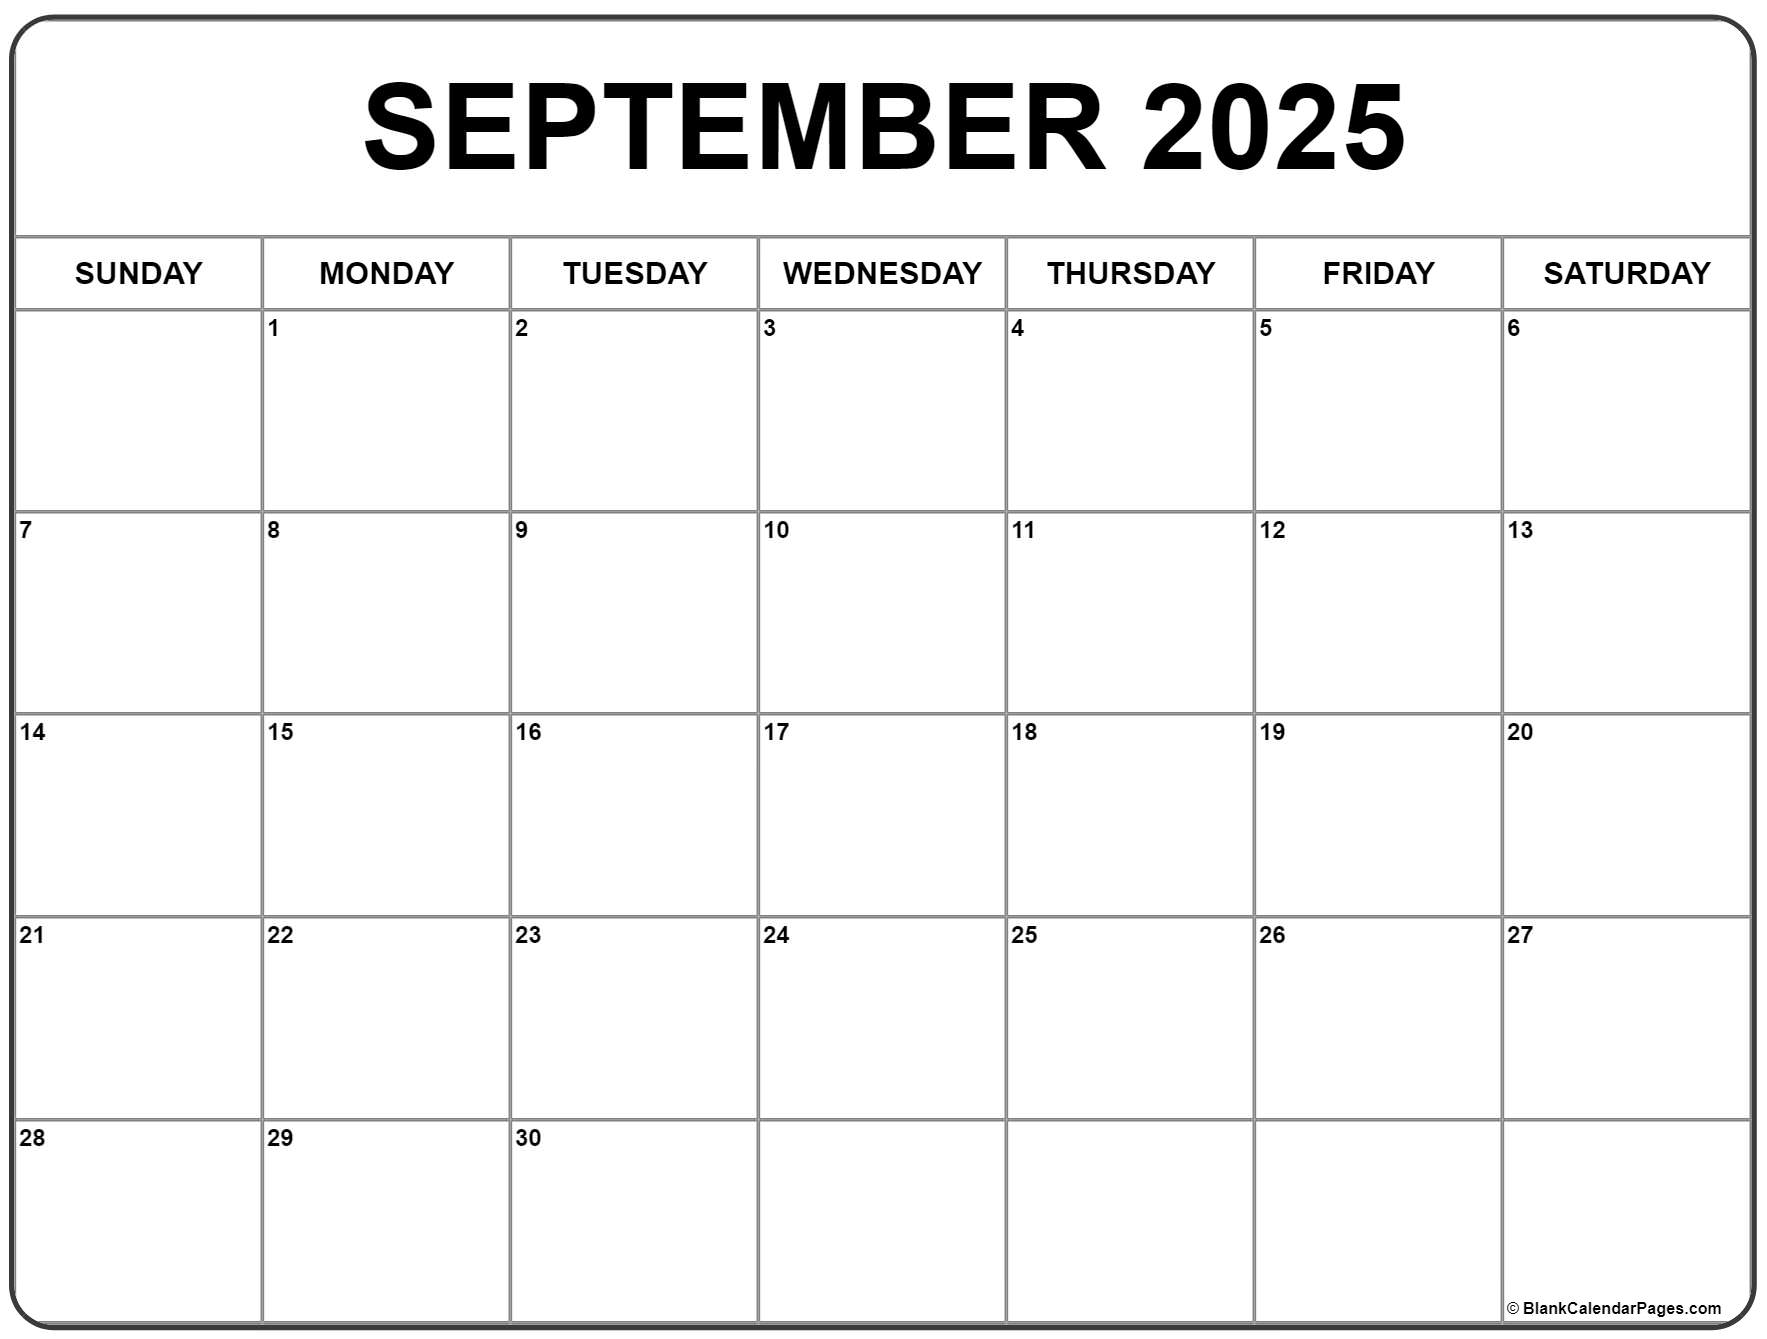 september-2025-calendar-free-printable-calendar